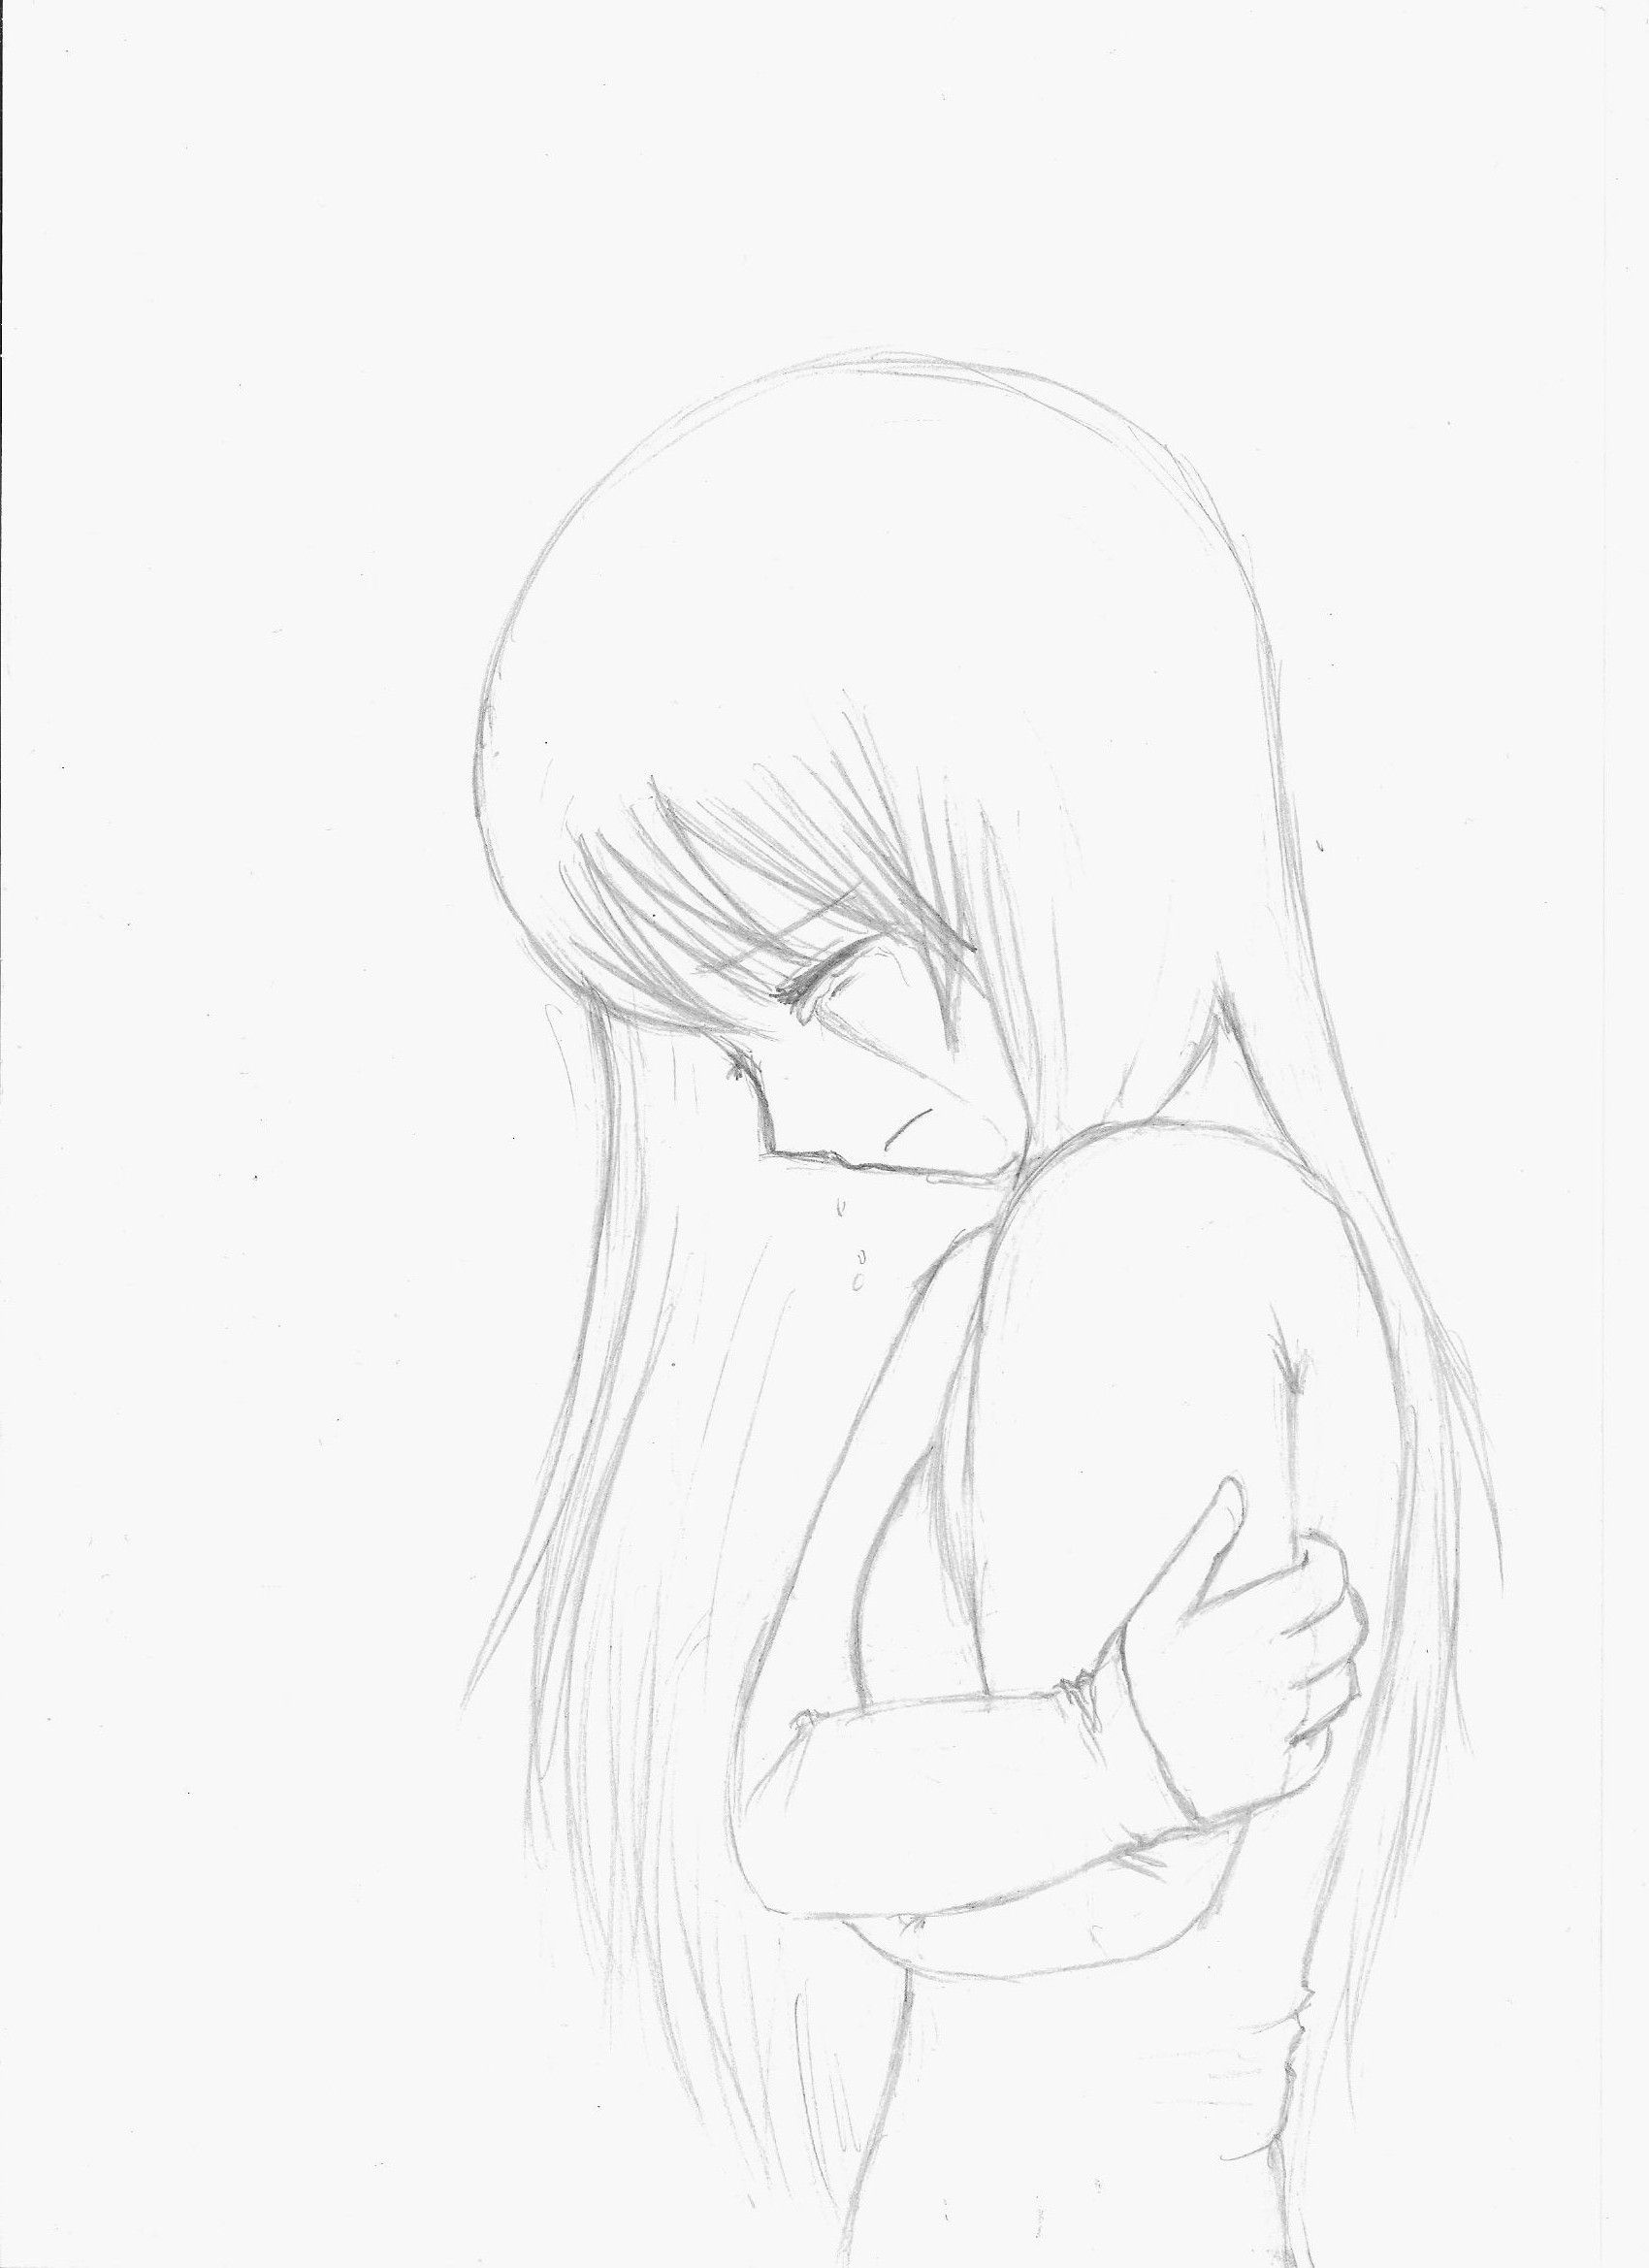 Depressed Anime Girl Drawing. Explore